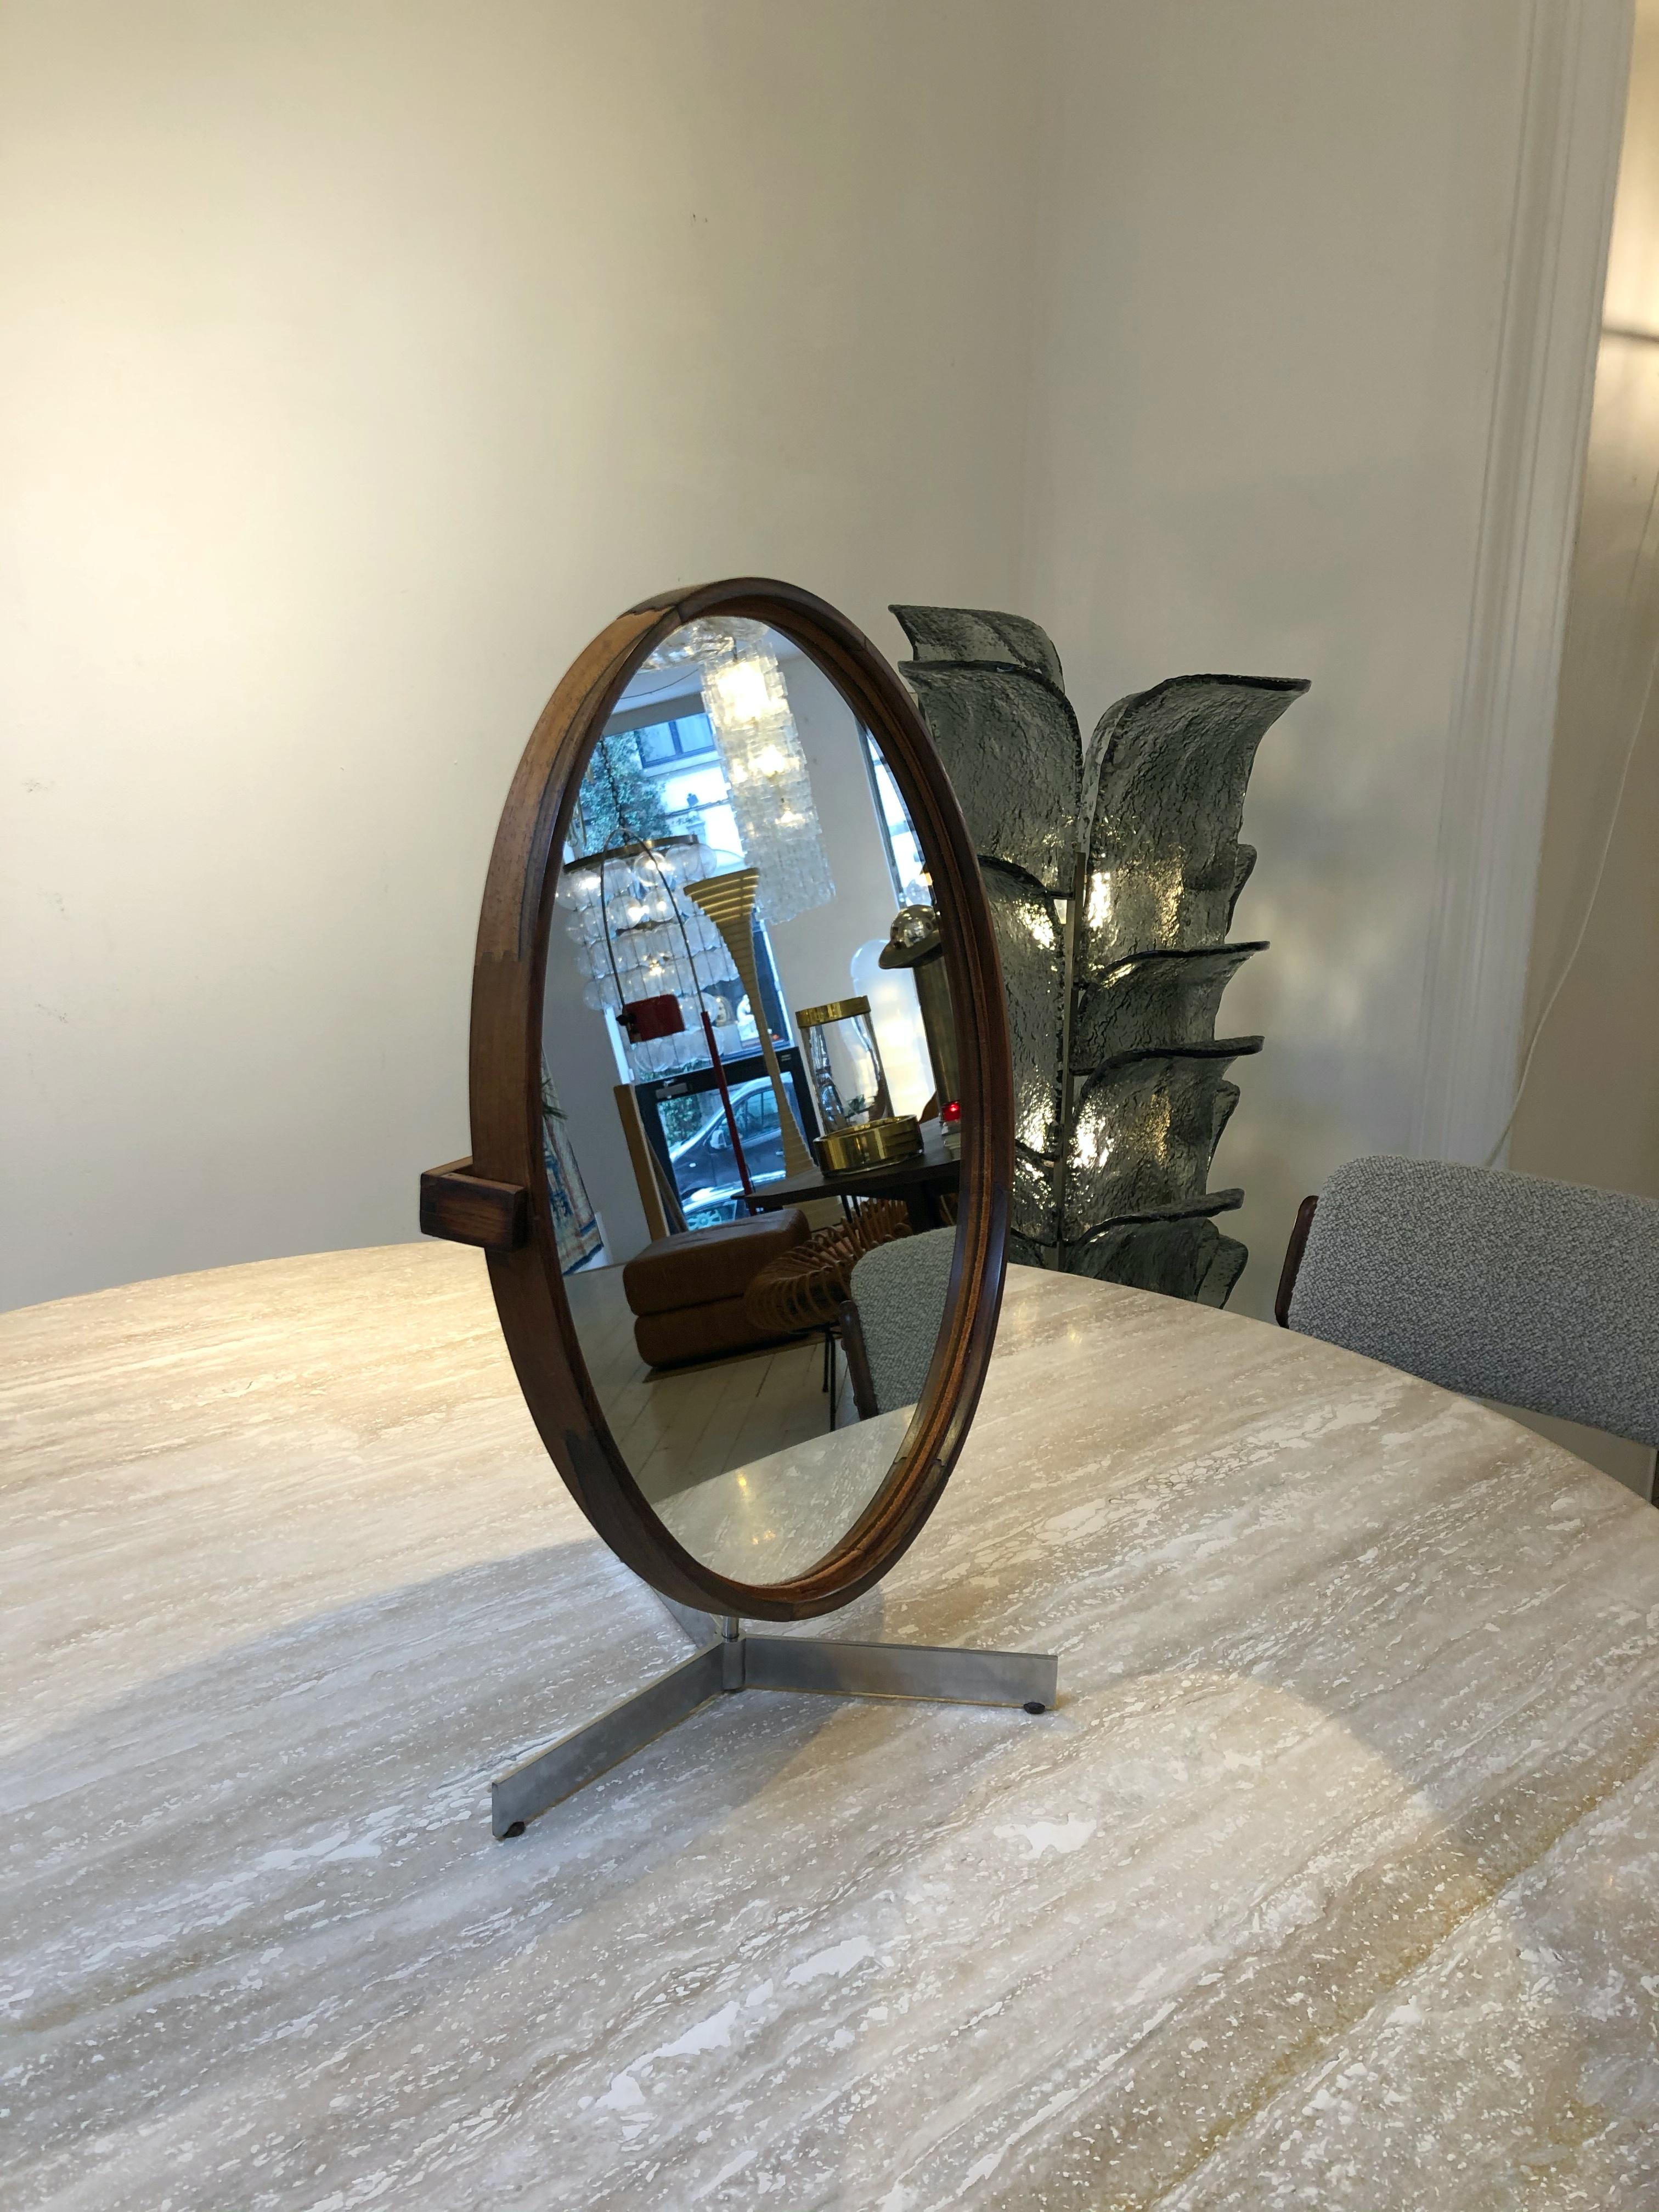 Teak table mirror by Uno & Östen Kristiansson for Luxus, 1960s.
   